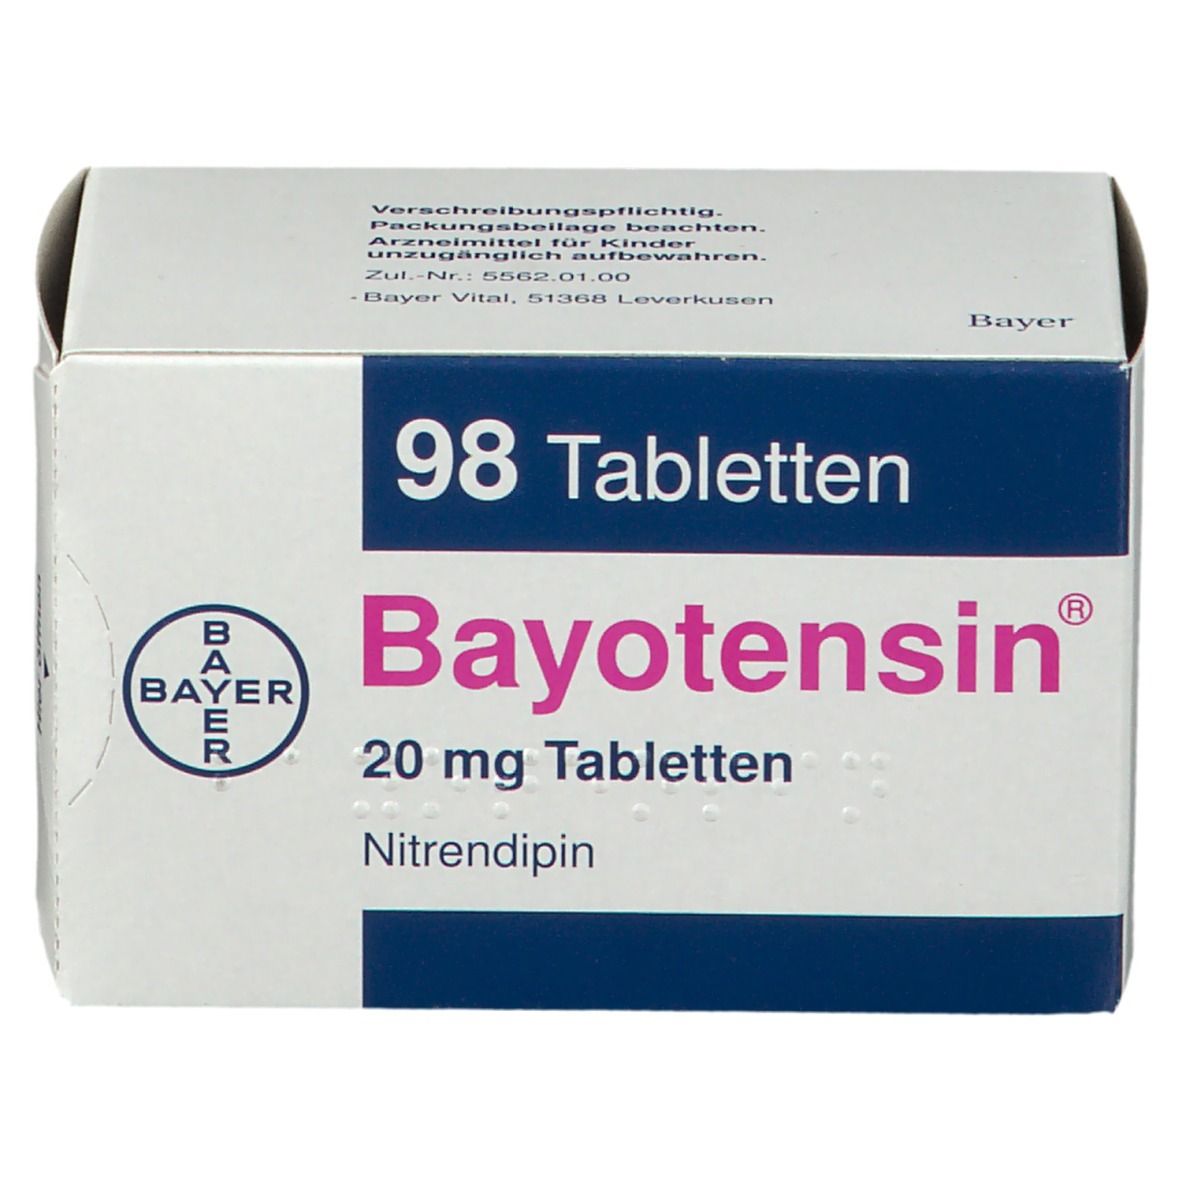 Bayotensin®